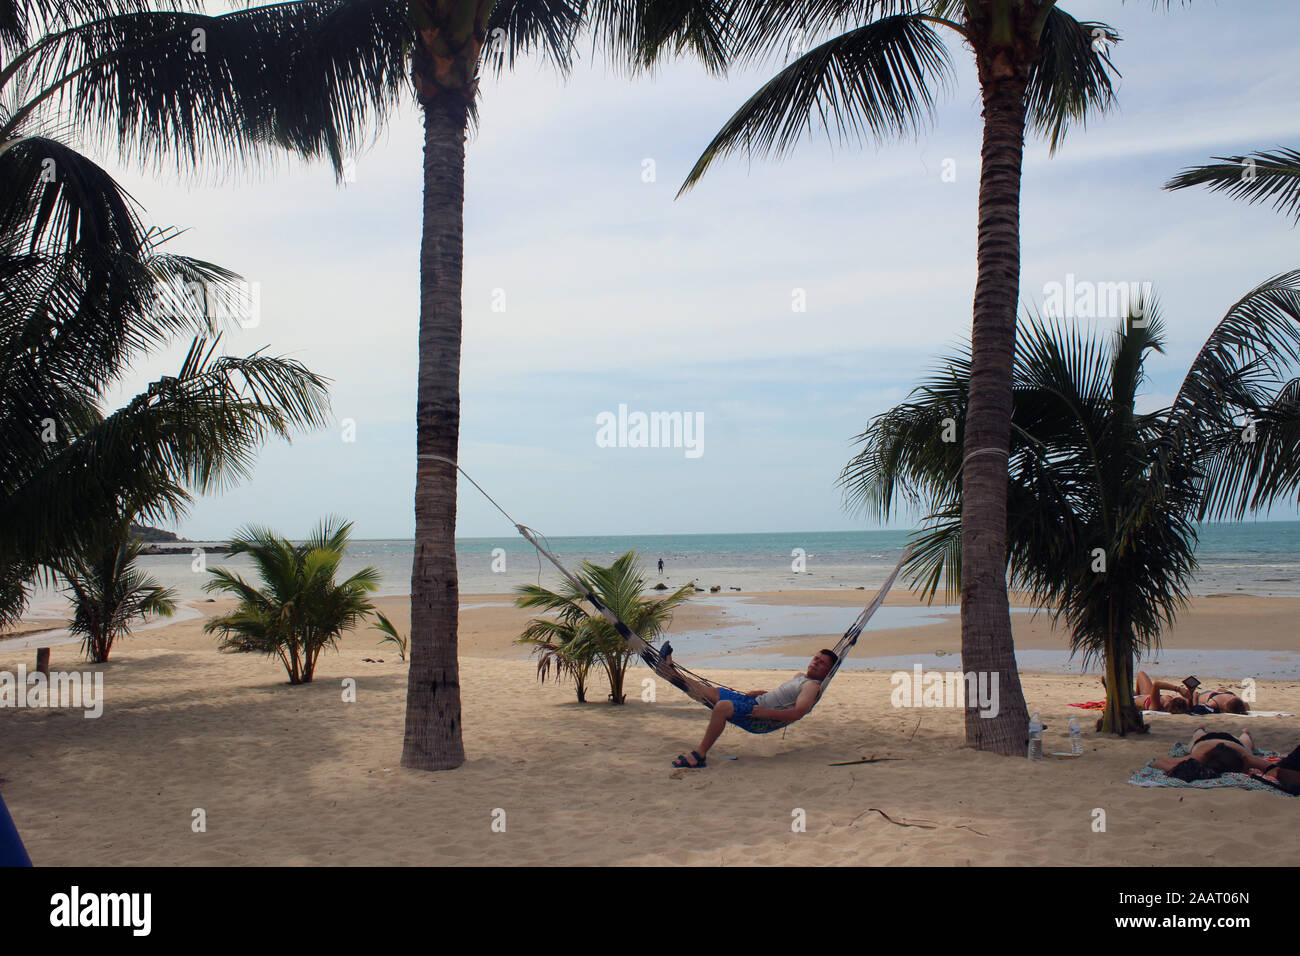 Man relaxing on Hammock on beach in Koh Samui Thaïlande Banque D'Images